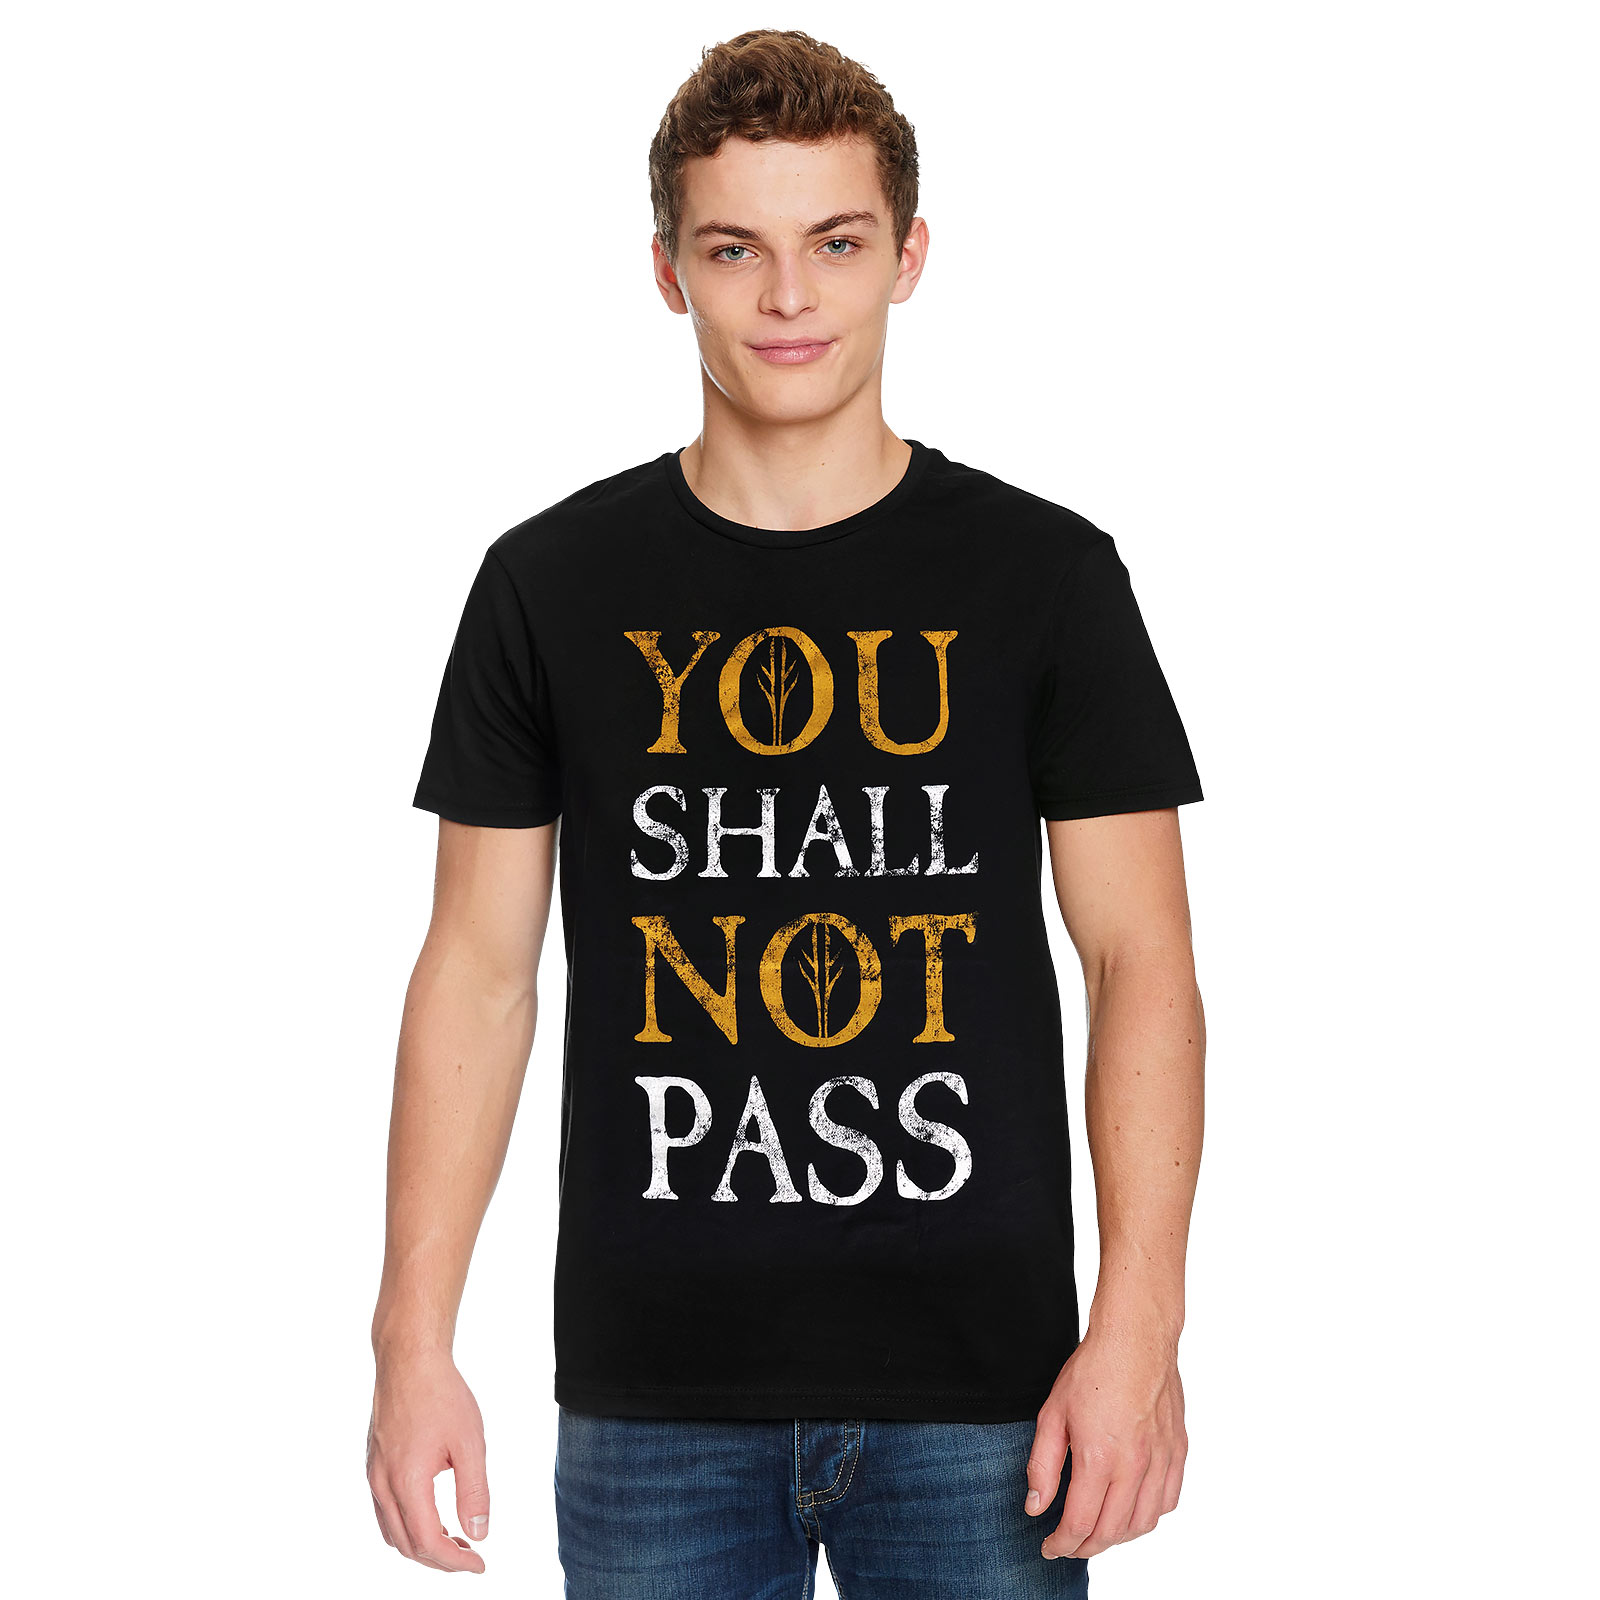 Herr der Ringe - You Shall Not Pass T-Shirt schwarz